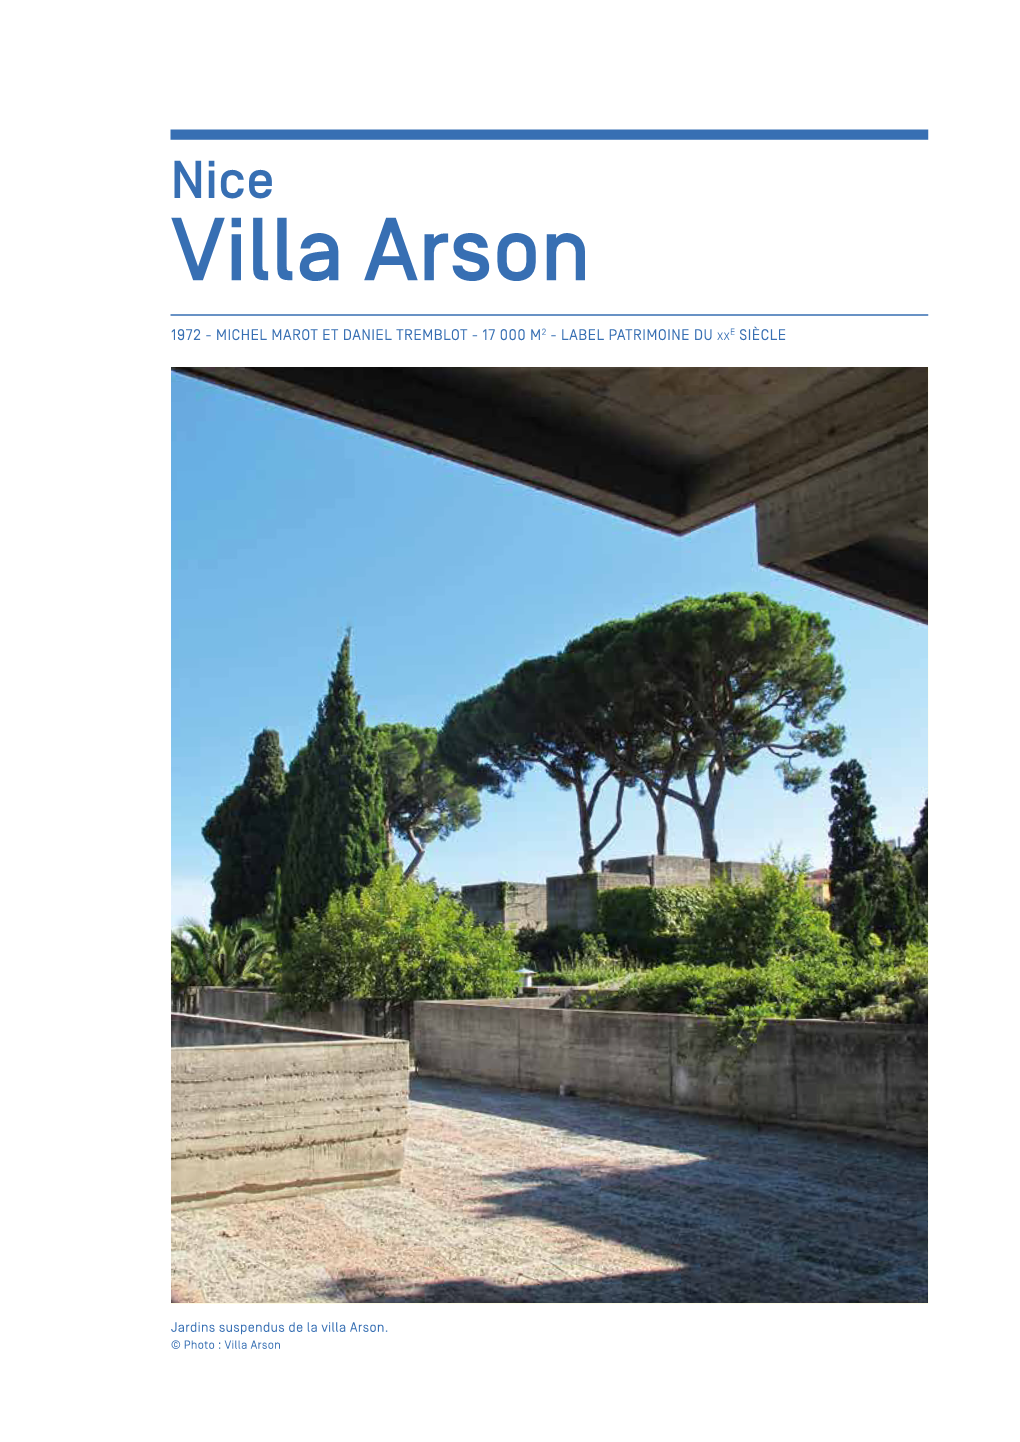 Nice – Villa Arson